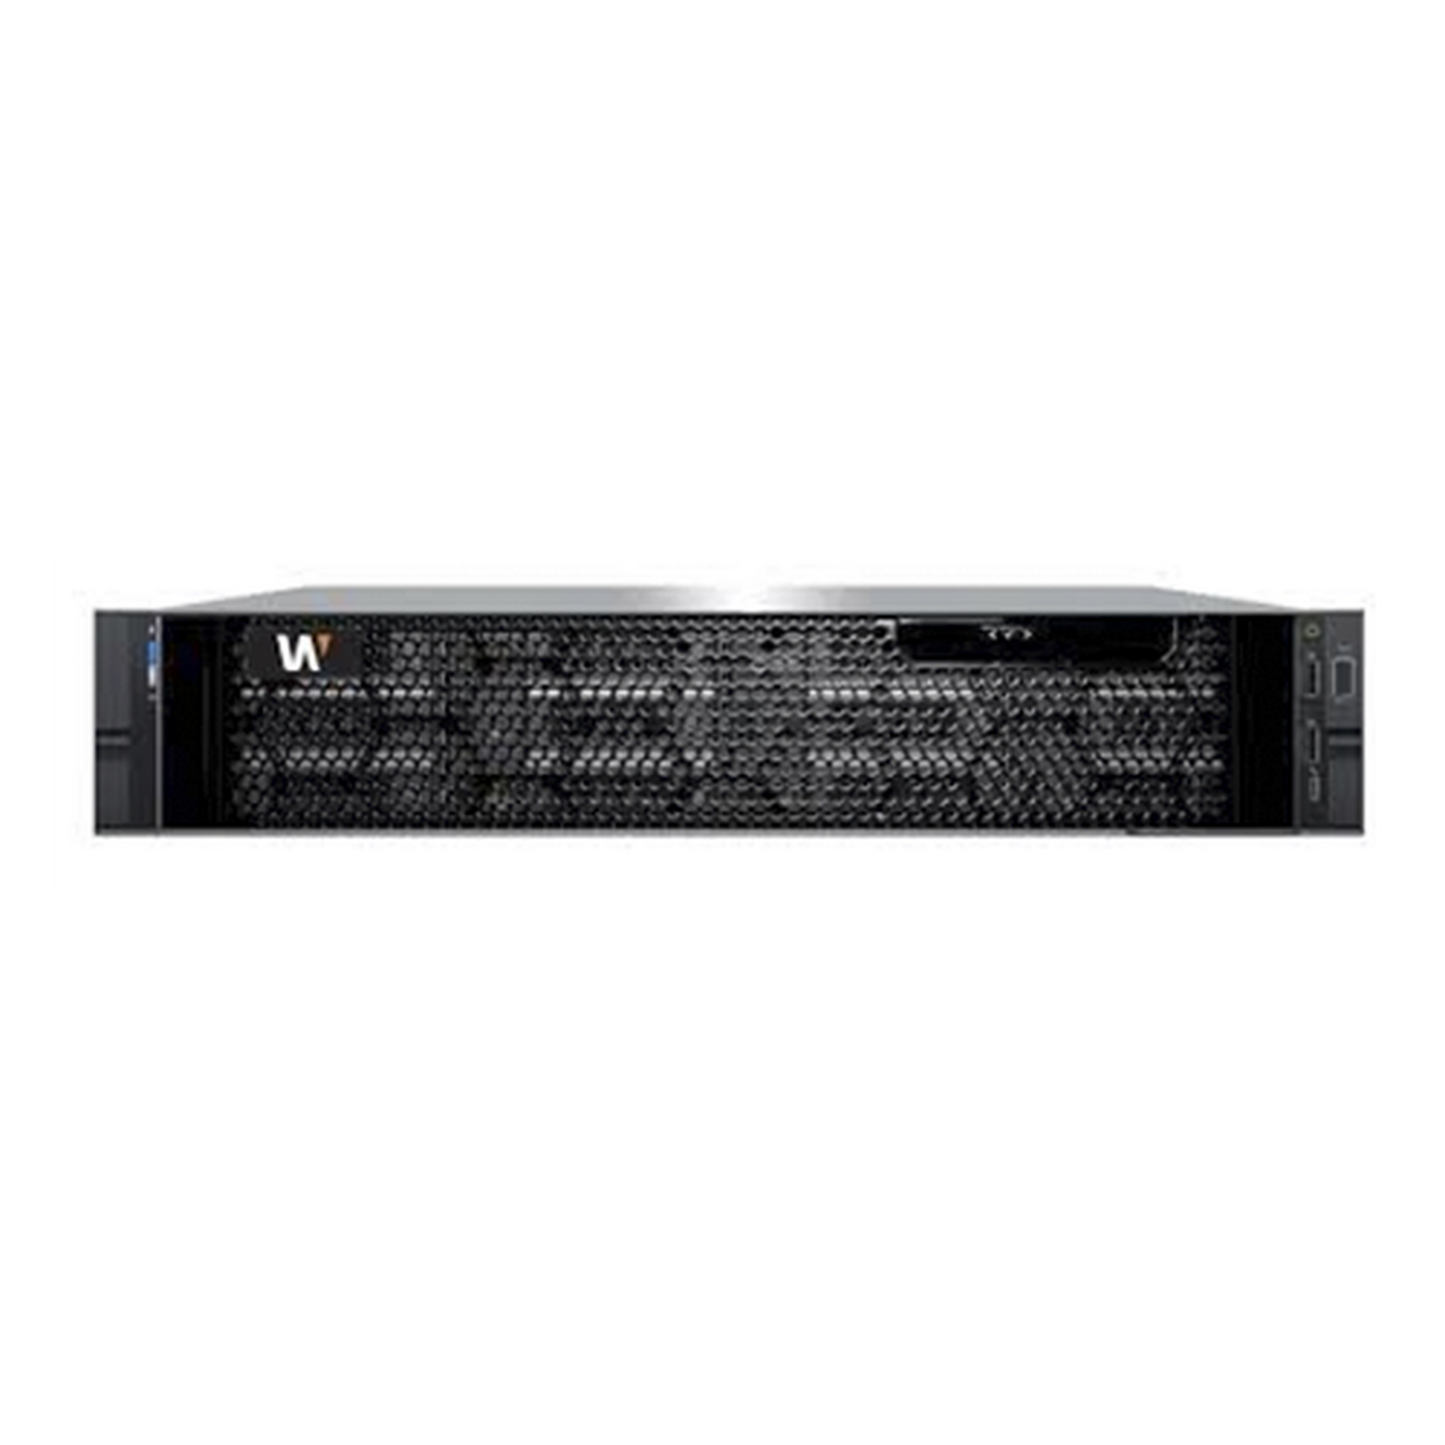 NVR Wisenet WAVE basada en Linux / Montable en Rack 2U / Incluye licencia WAVE-PRO-04 / 470 Mbps throughput / Incluye 144 TB para almacenamiento